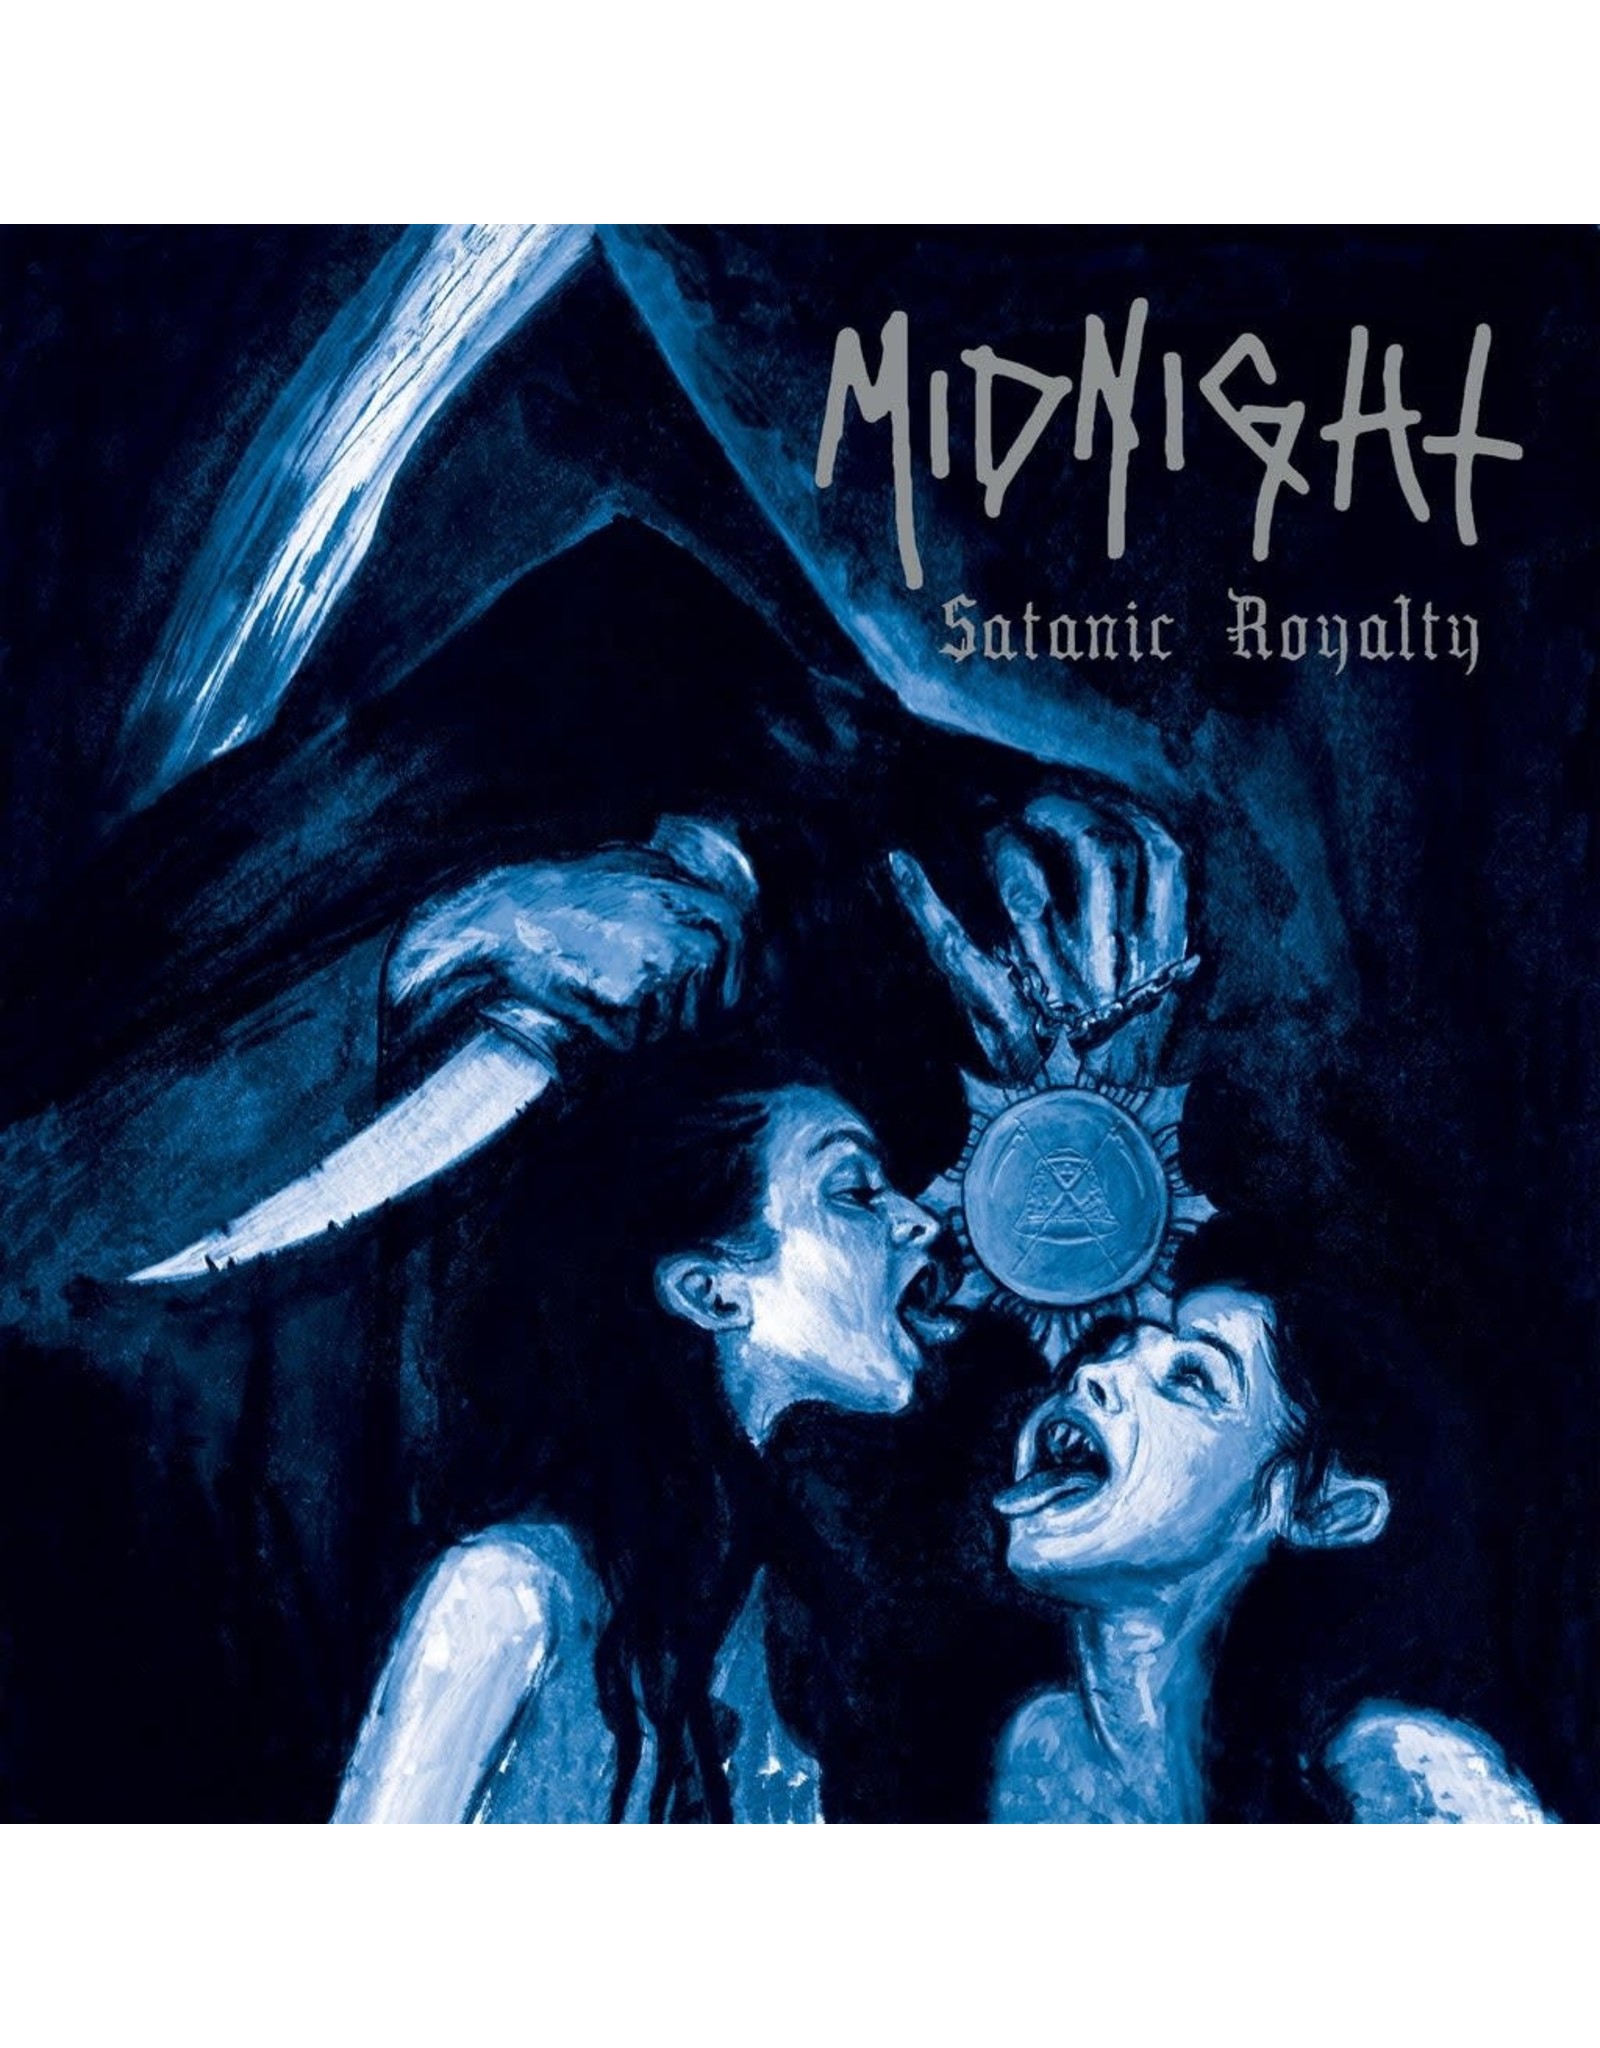 Midnight - Satanic Royalty 2LP (Aqua Blue & Black Melt Vinyl)